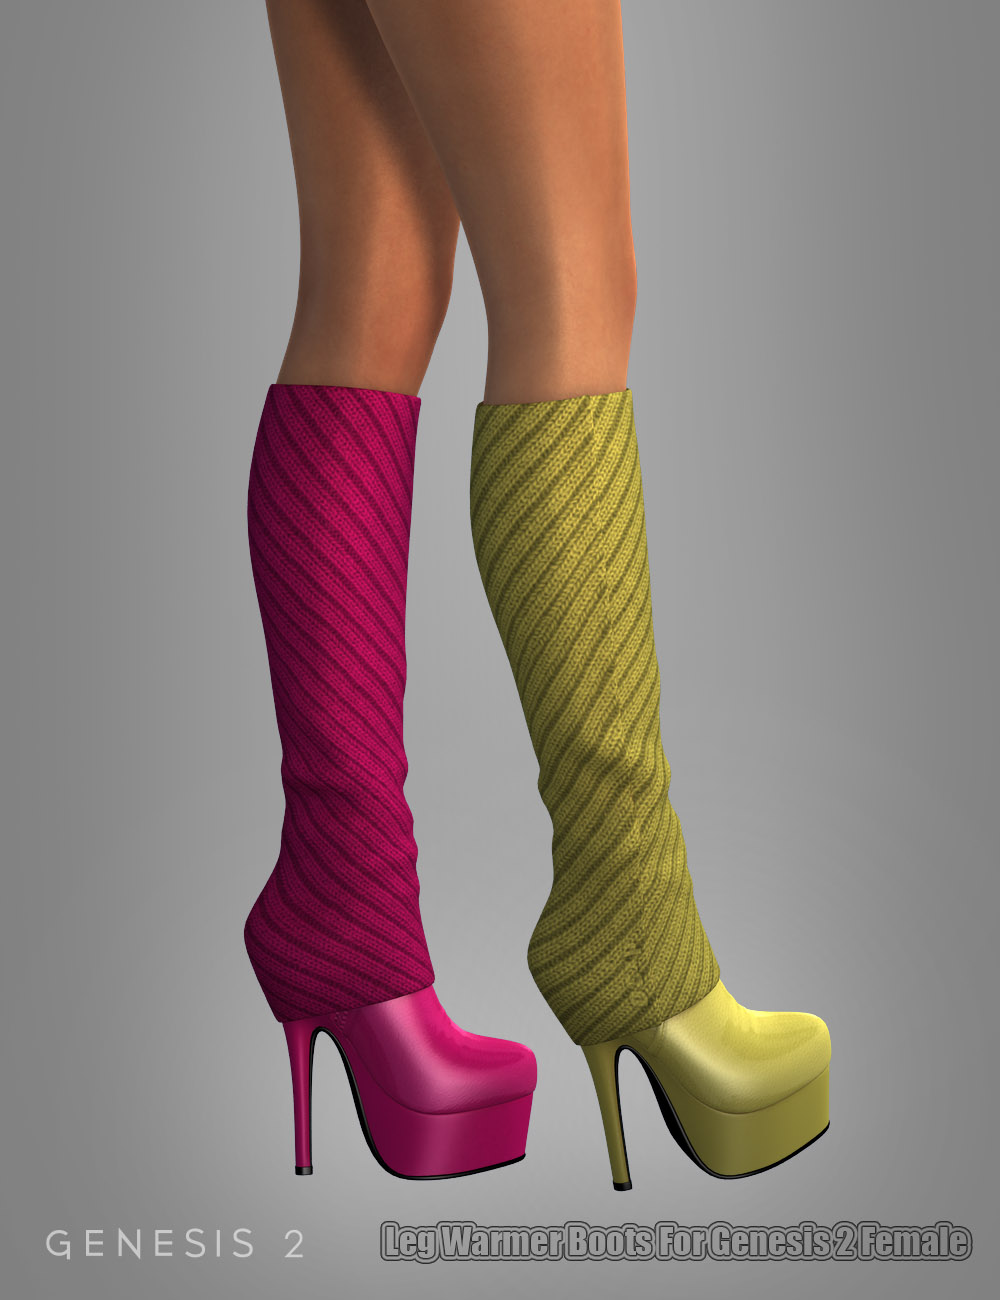 Leg Warmer Boots For Genesis 2 Female(s) by: dx30, 3D Models by Daz 3D